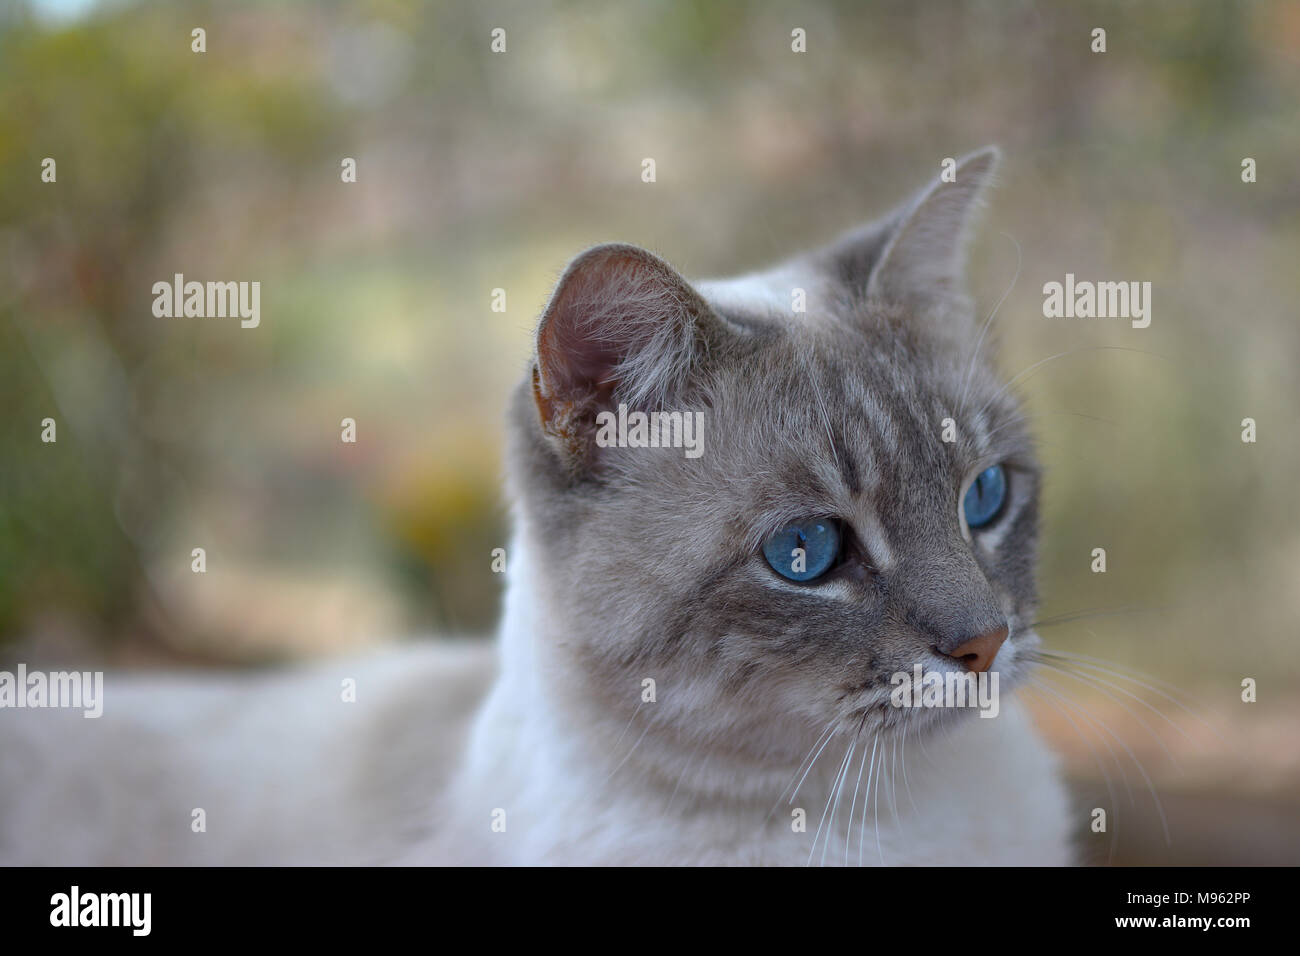 Portrait Adorable graue Katze mit blauen Augen Stockfotografie - Alamy